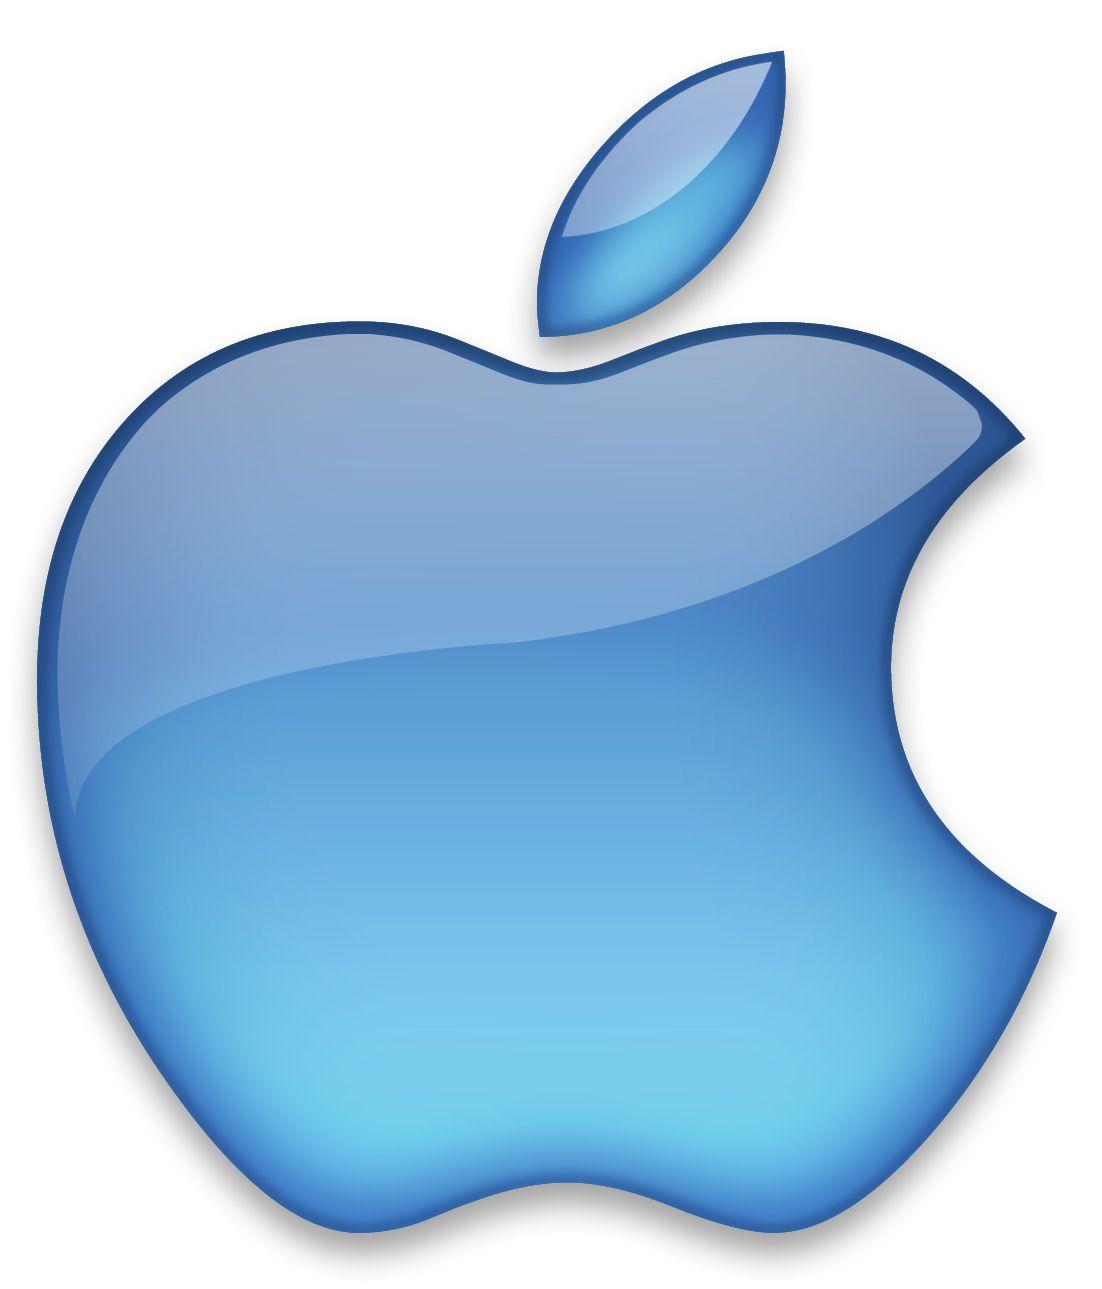 Blue Apple Logo - Apple Logo. Beck. Apple, Apple logo, Apple inc